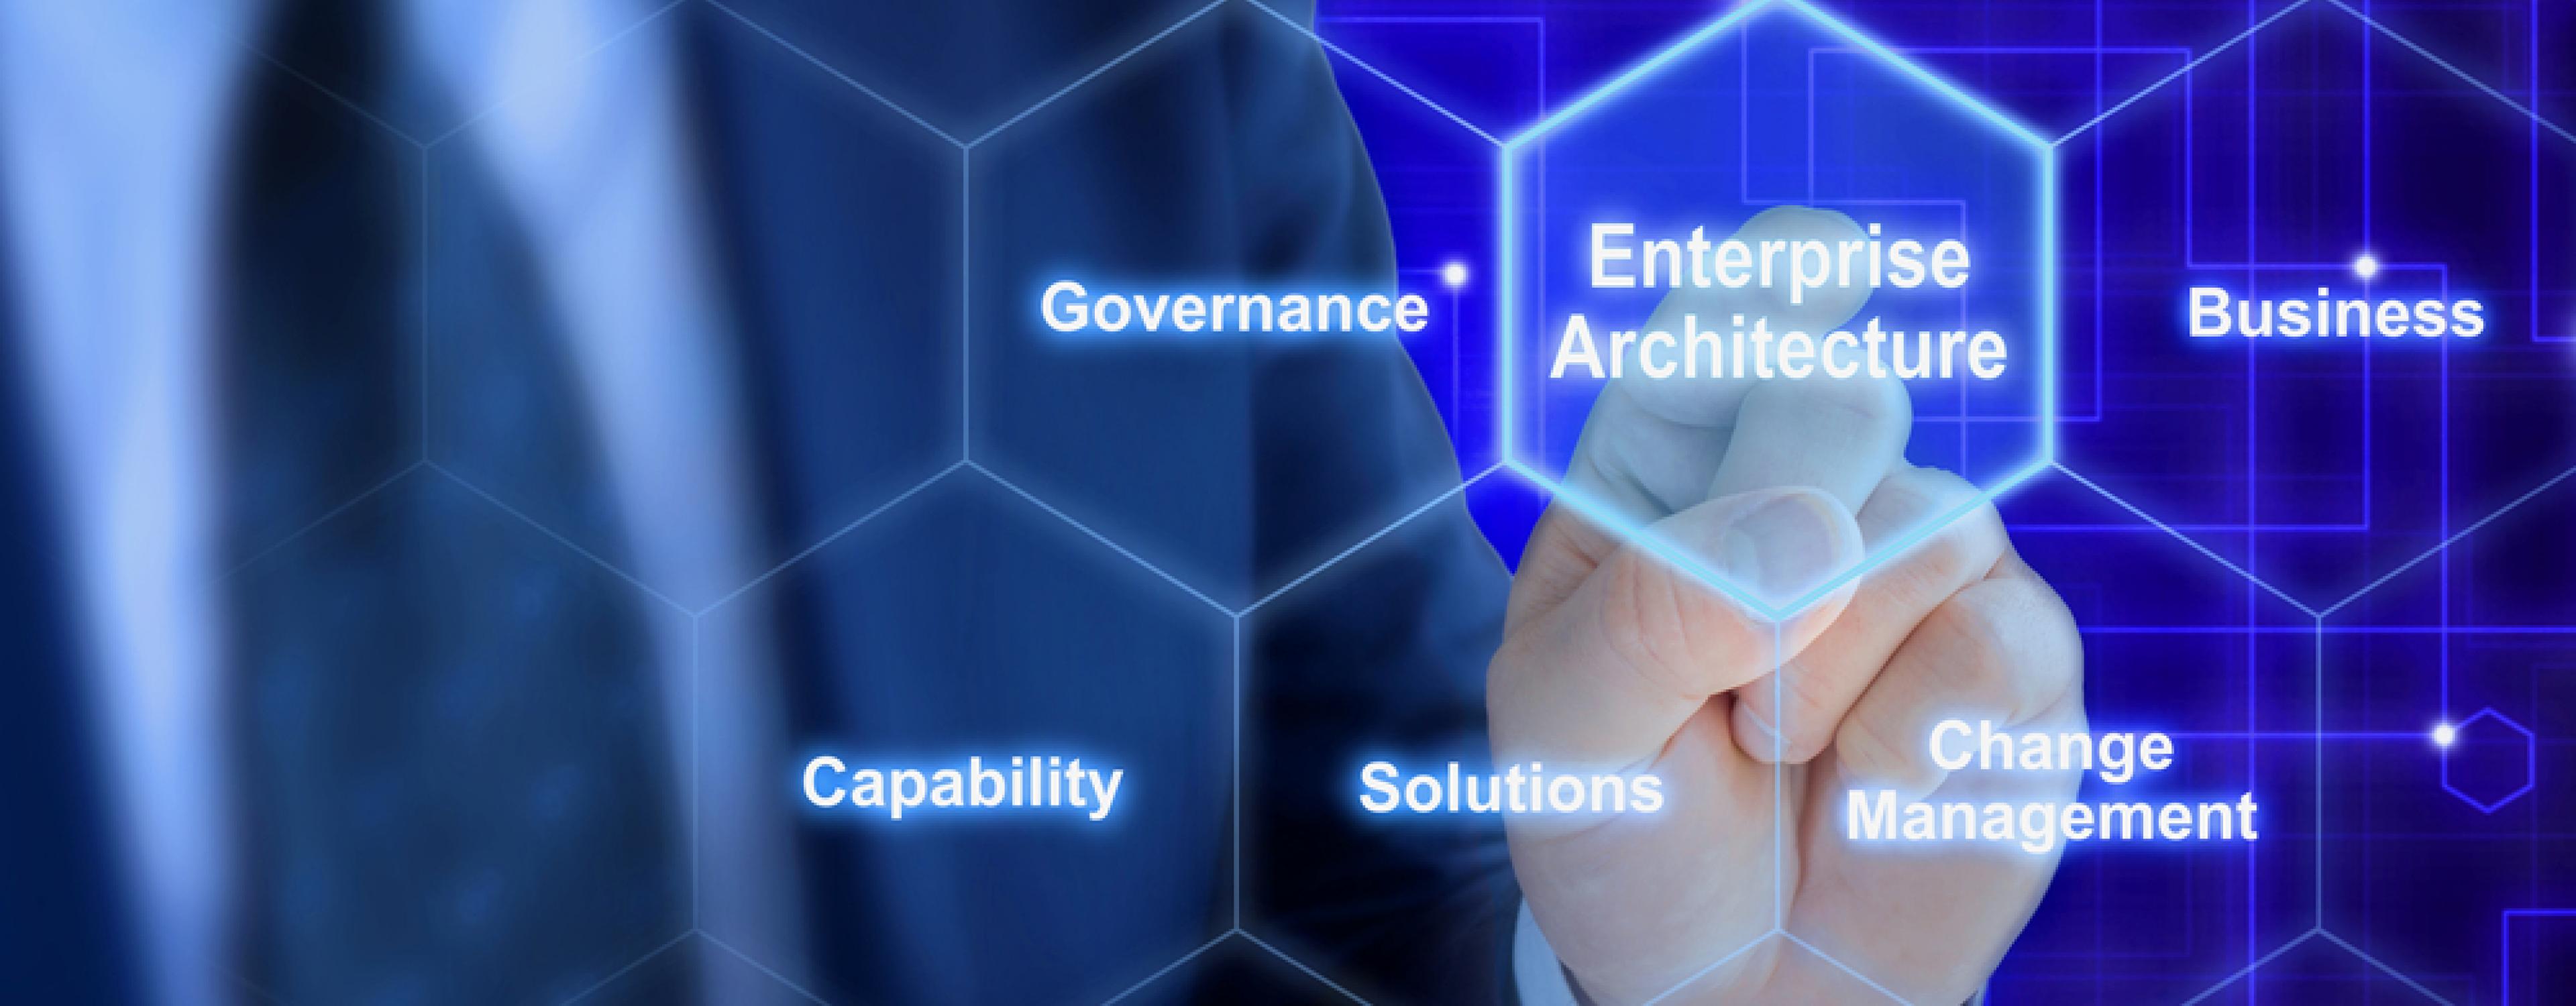 Enterprise-architecture